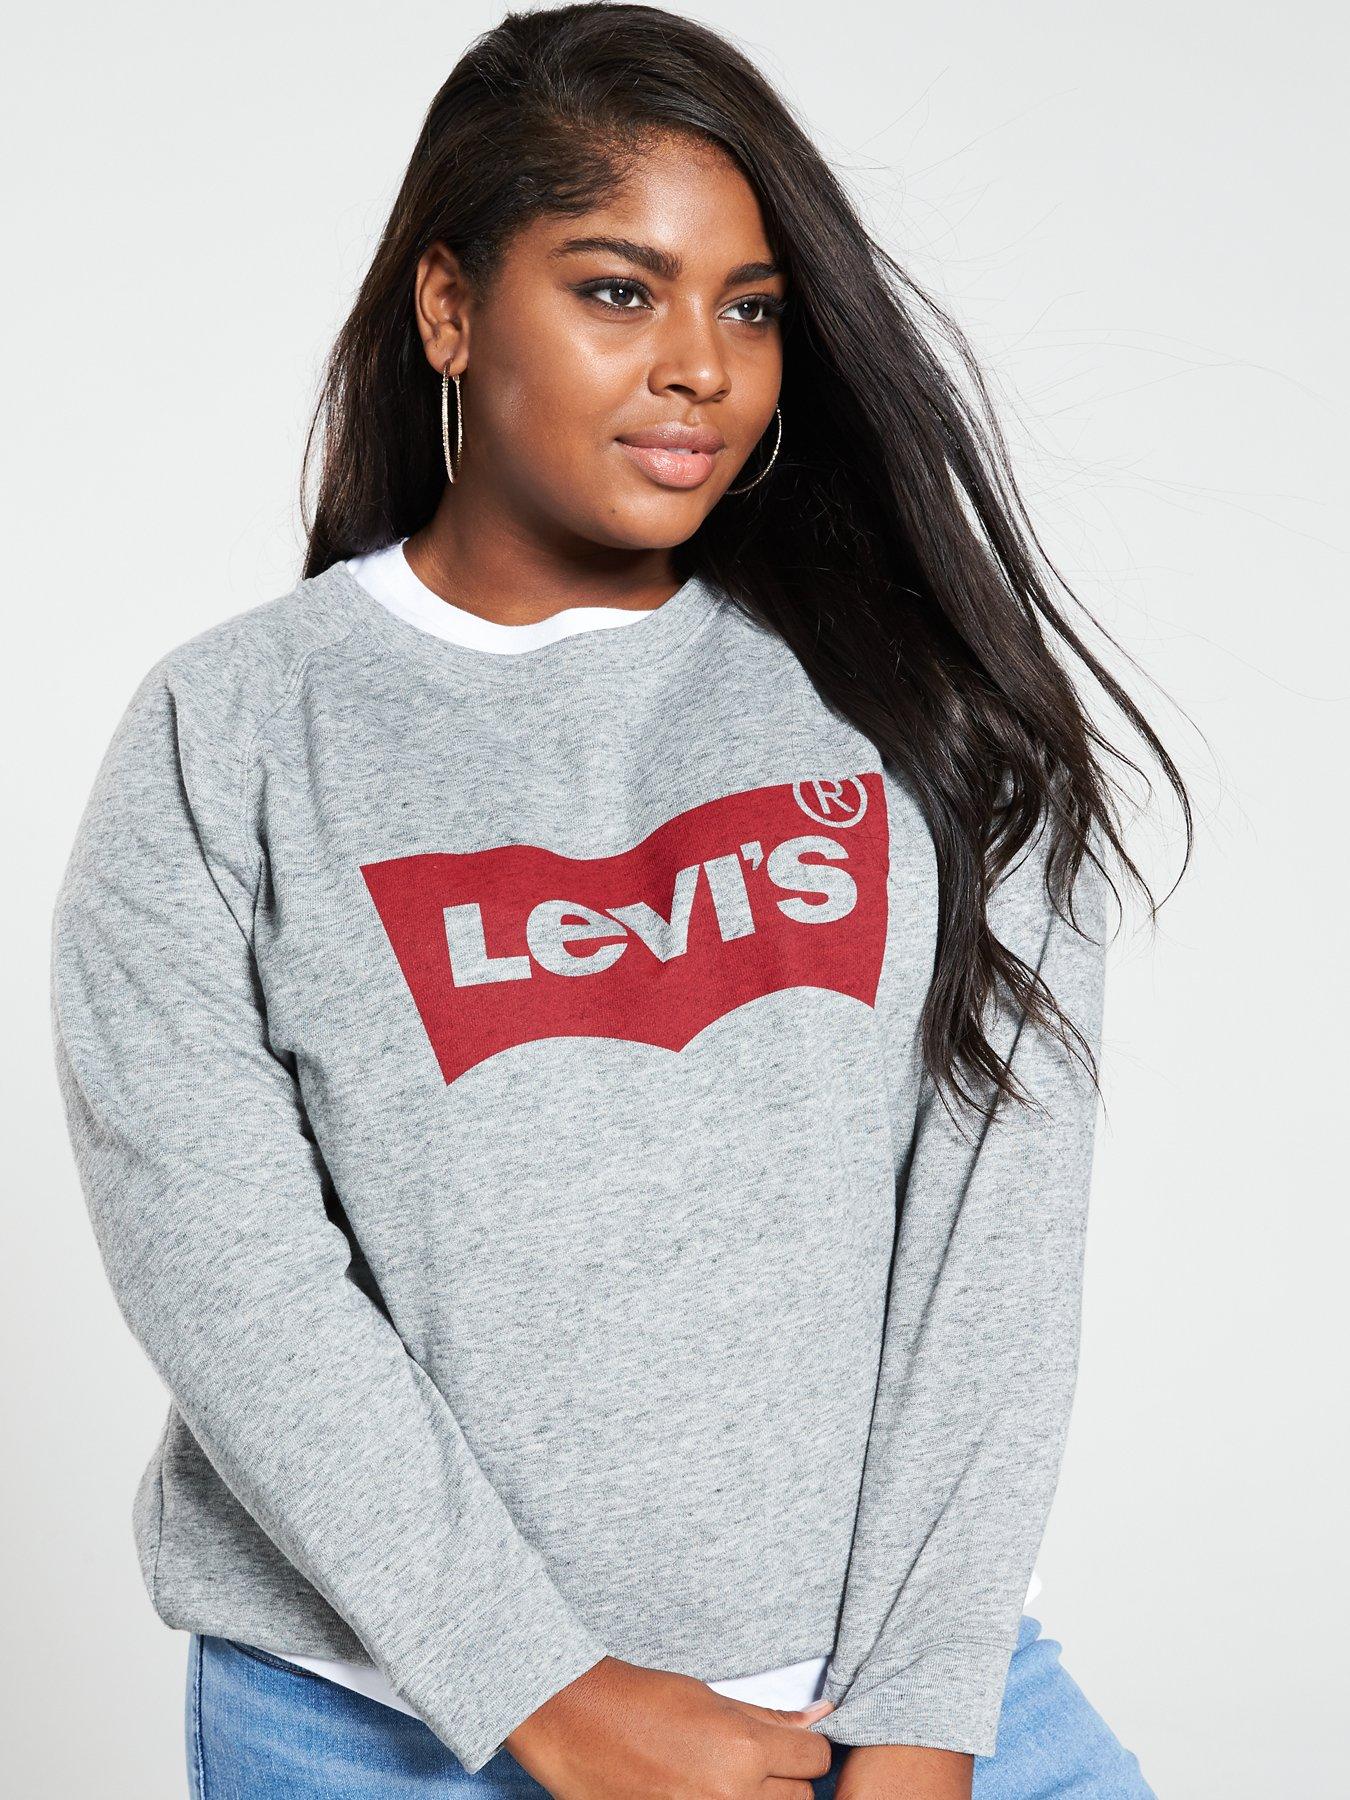 levi's grey sweatshirt